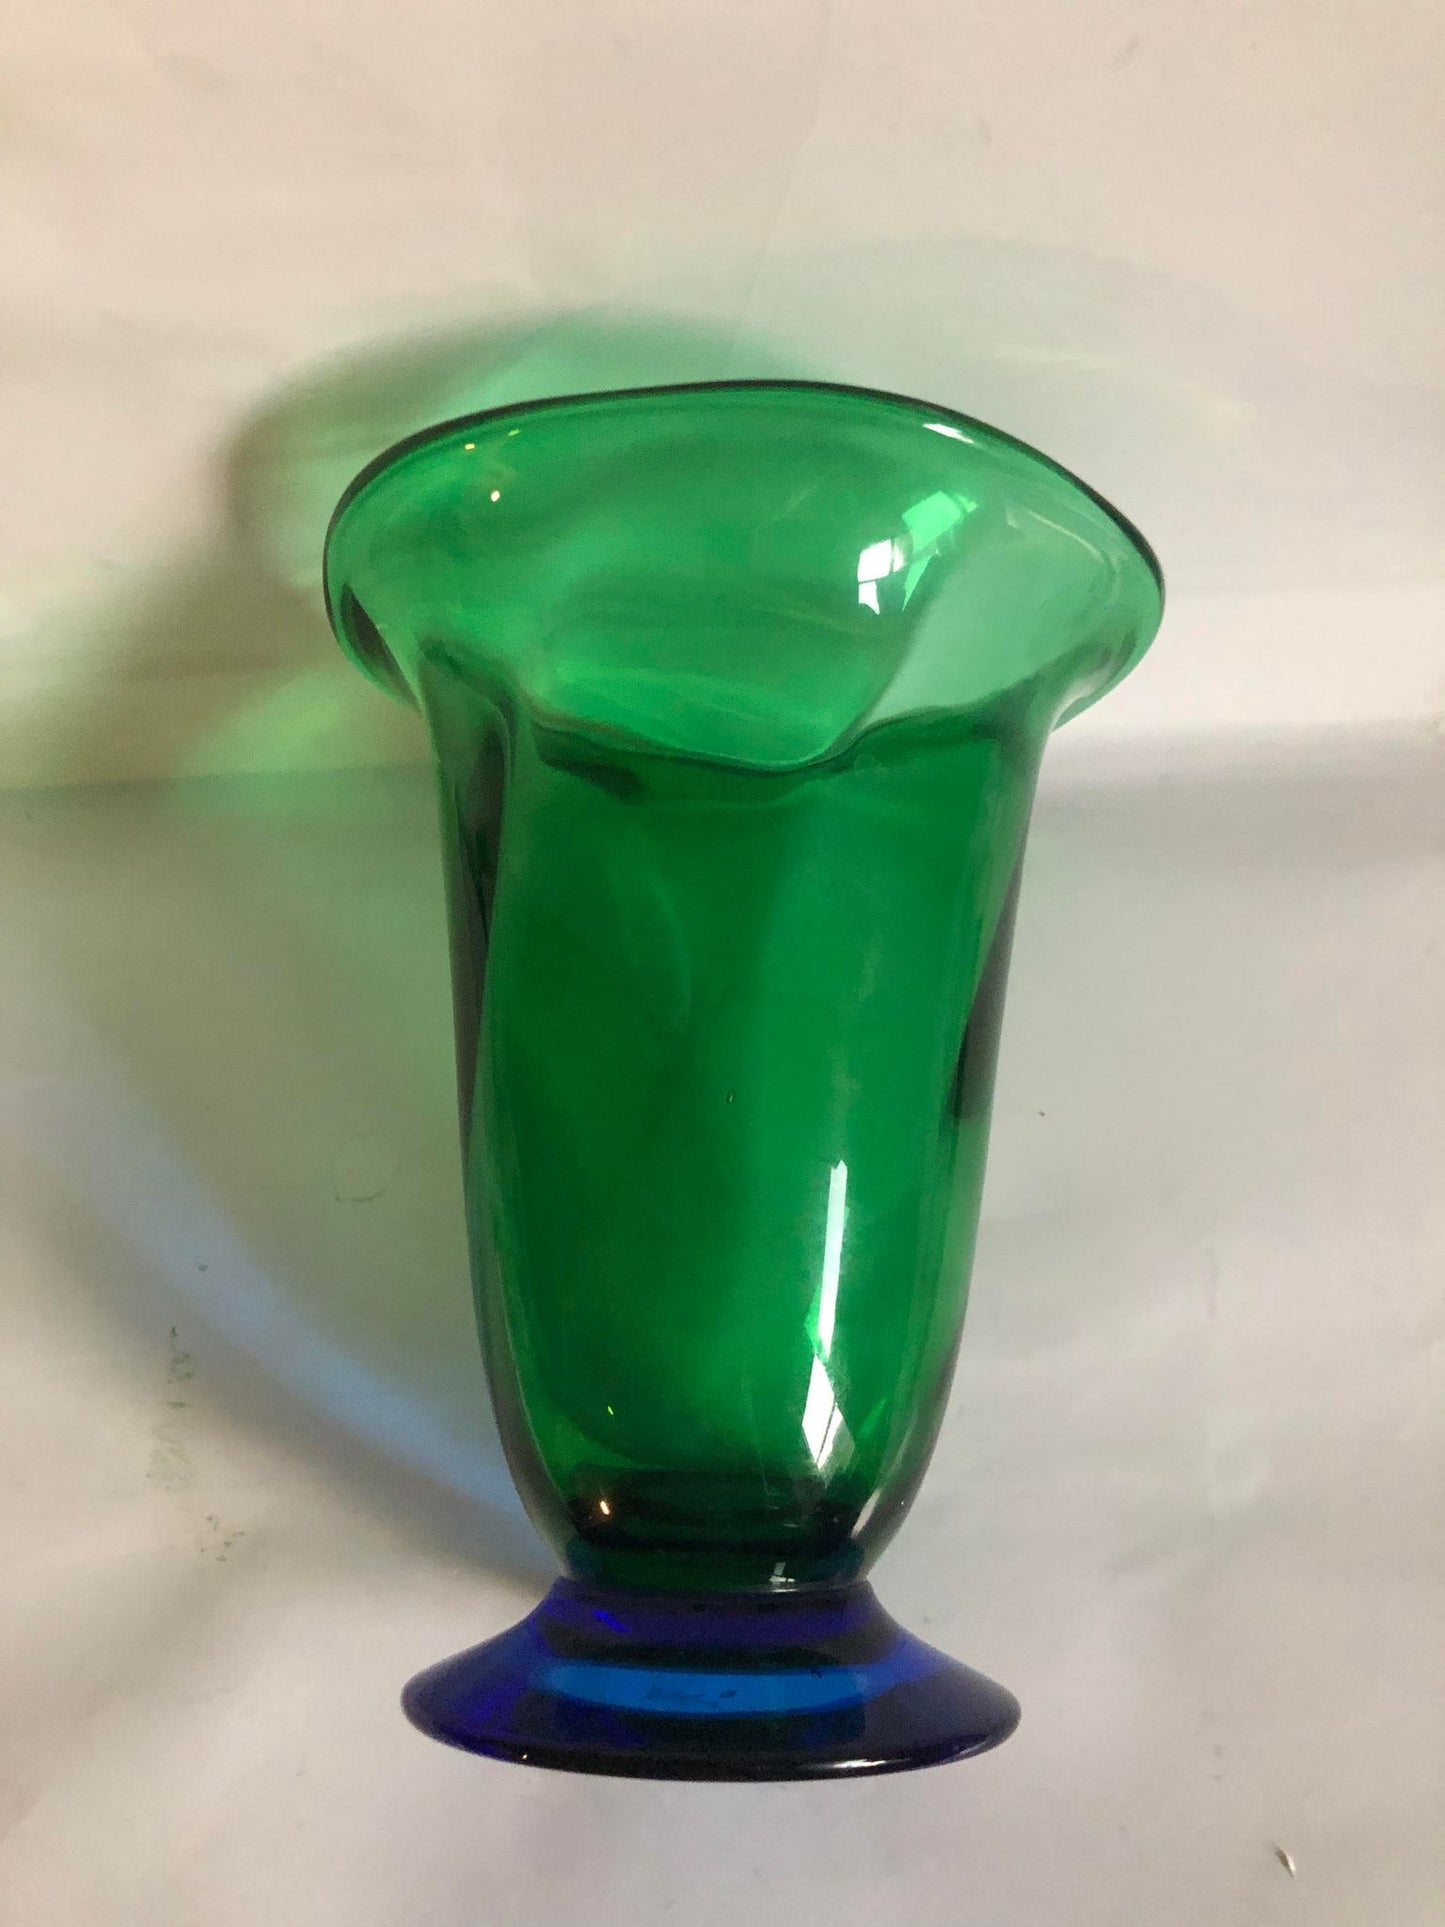 Orrefors の美しいレトロな花瓶 ブルー グリーン - no. 0629